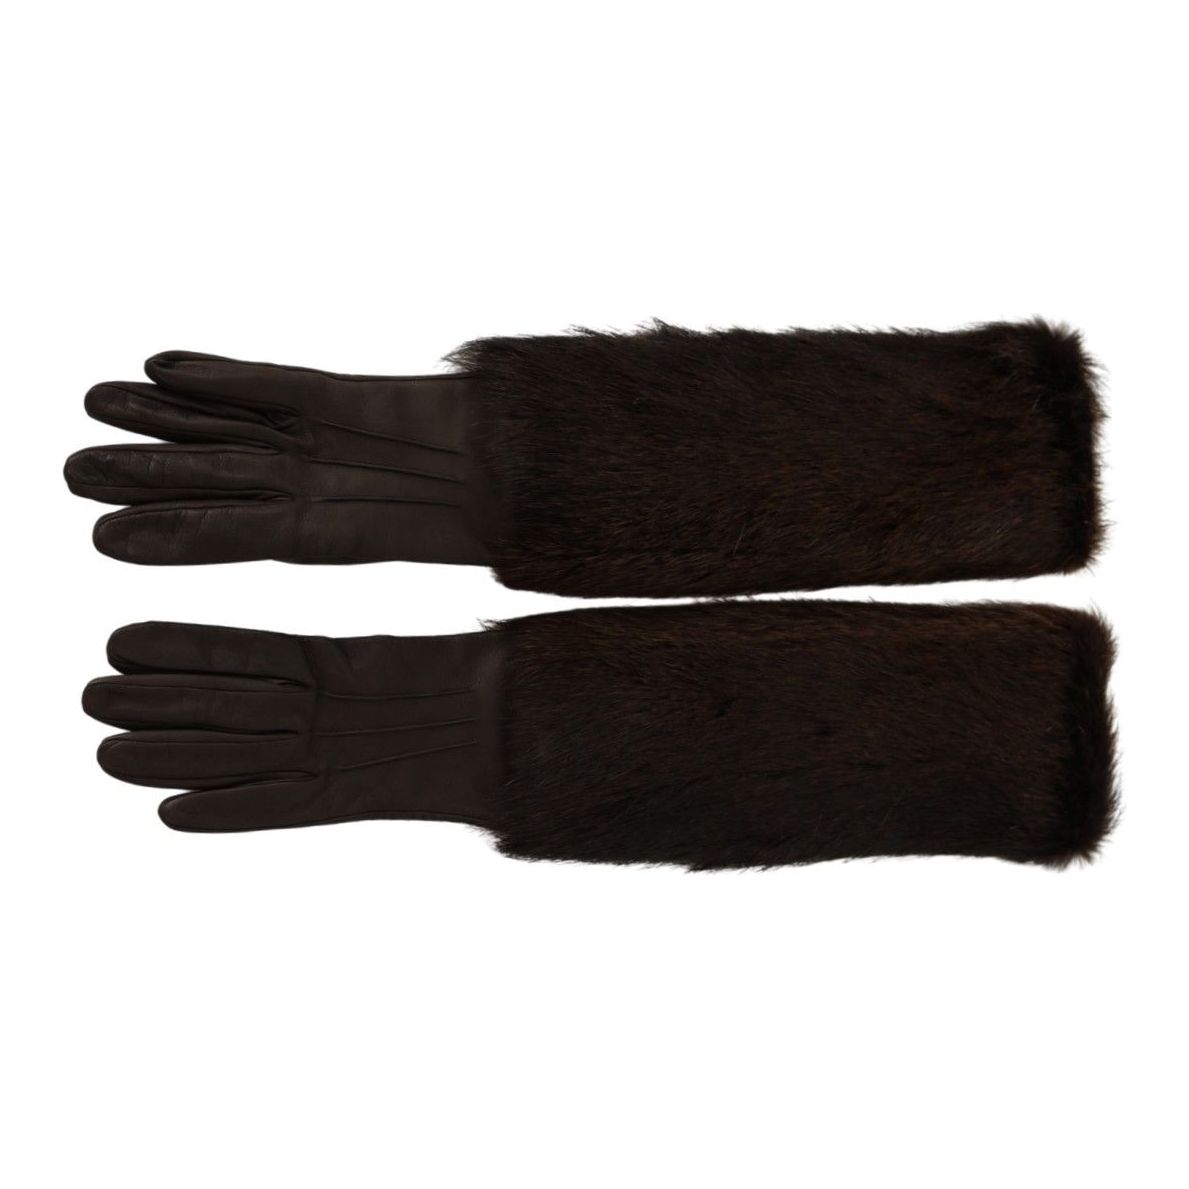 Dolce & Gabbana Elegant Elbow Length Leather Gloves brown-elbow-length-mittens-leather-fur-gloves IMG_9938-1-c8c2a850-61b.jpg